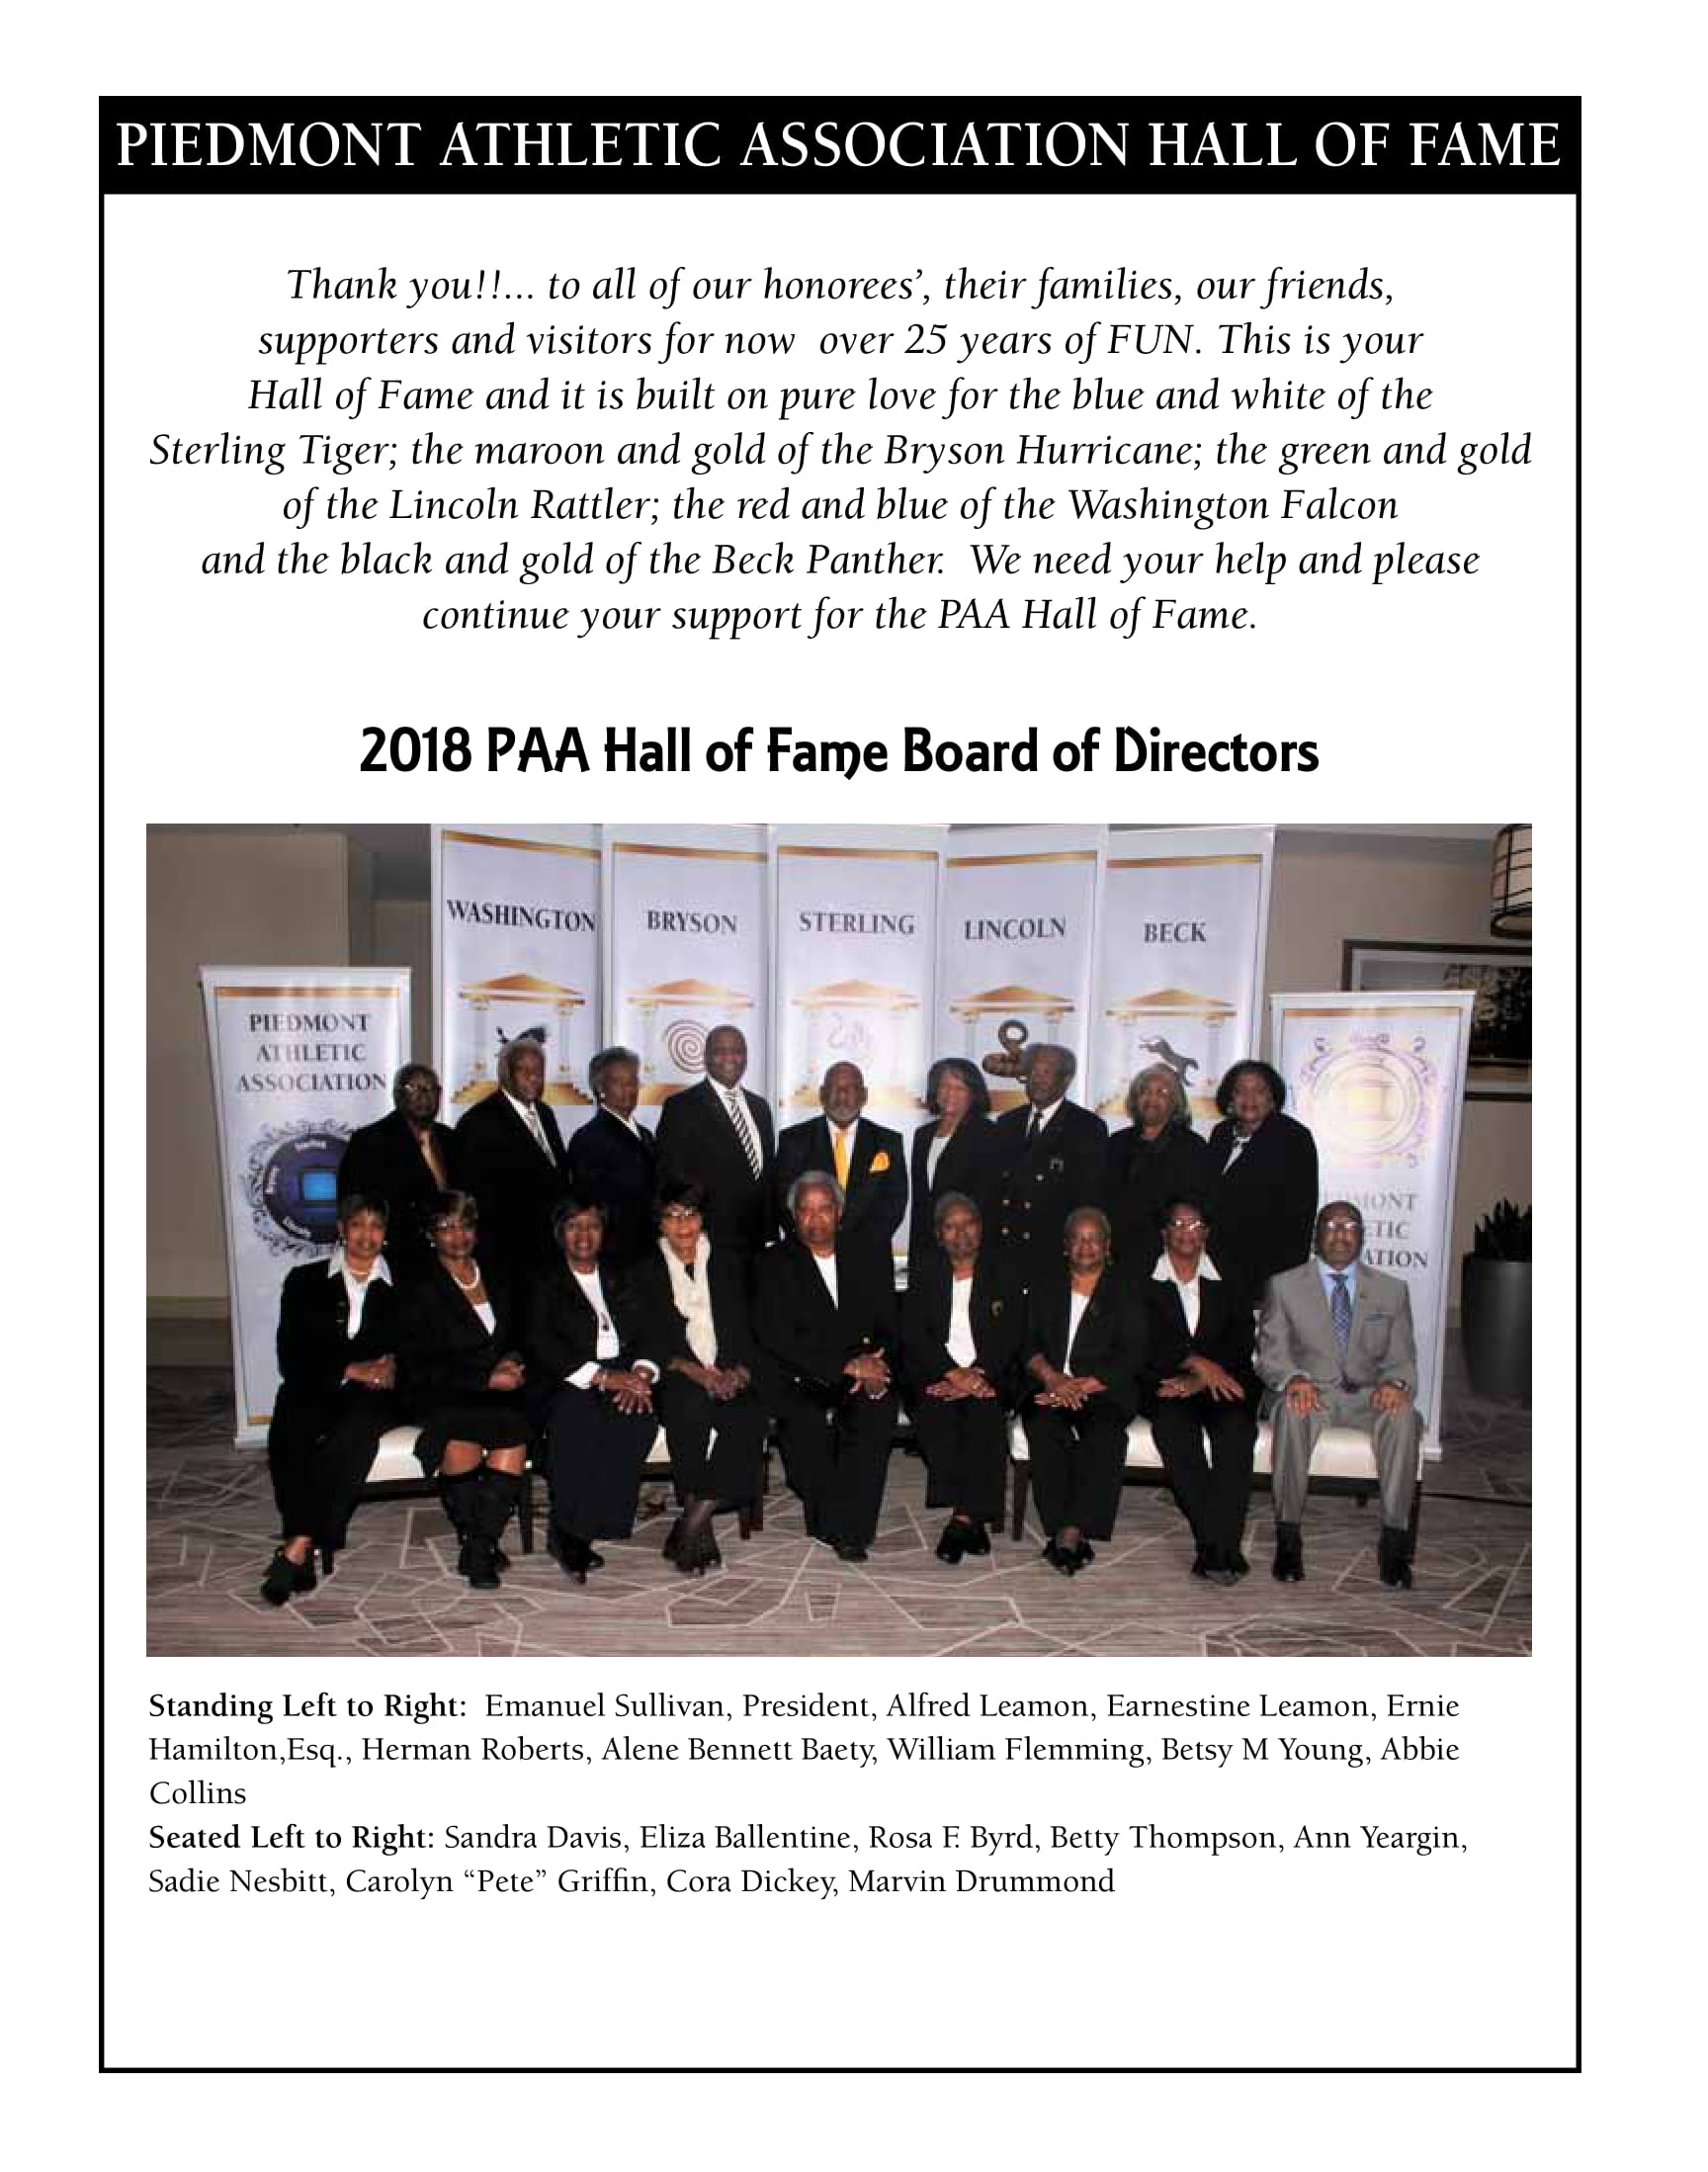 Board of Directors - 2018